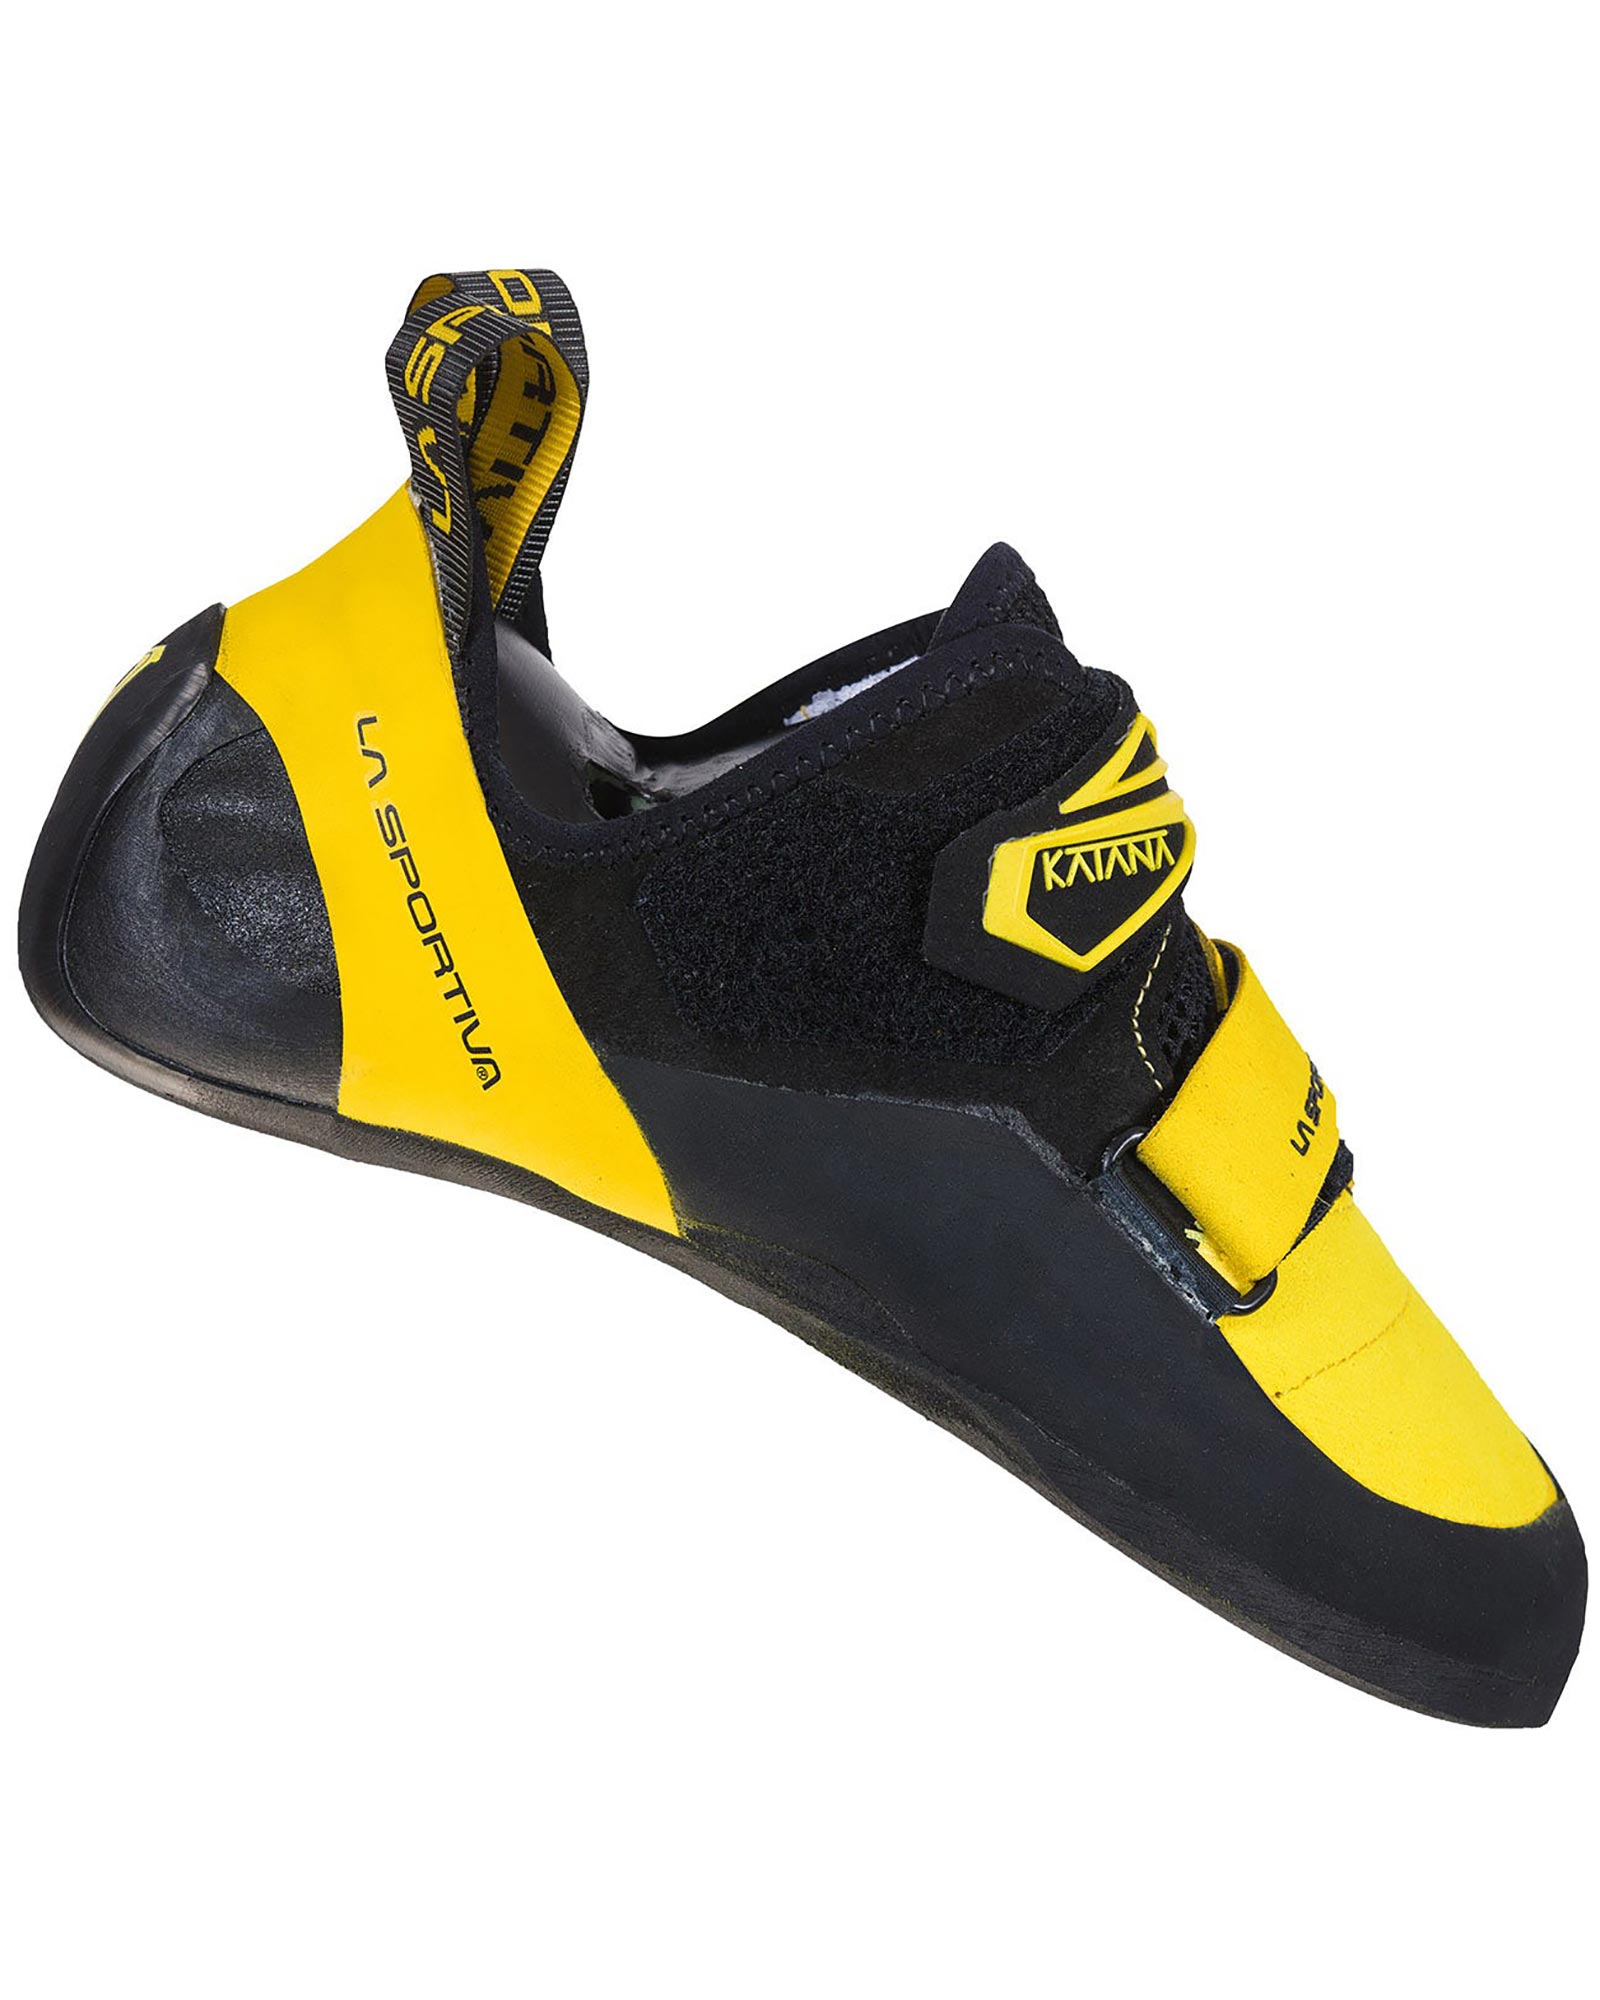 La Sportiva Katana Men’s Shoes - Yellow/Black EU 45